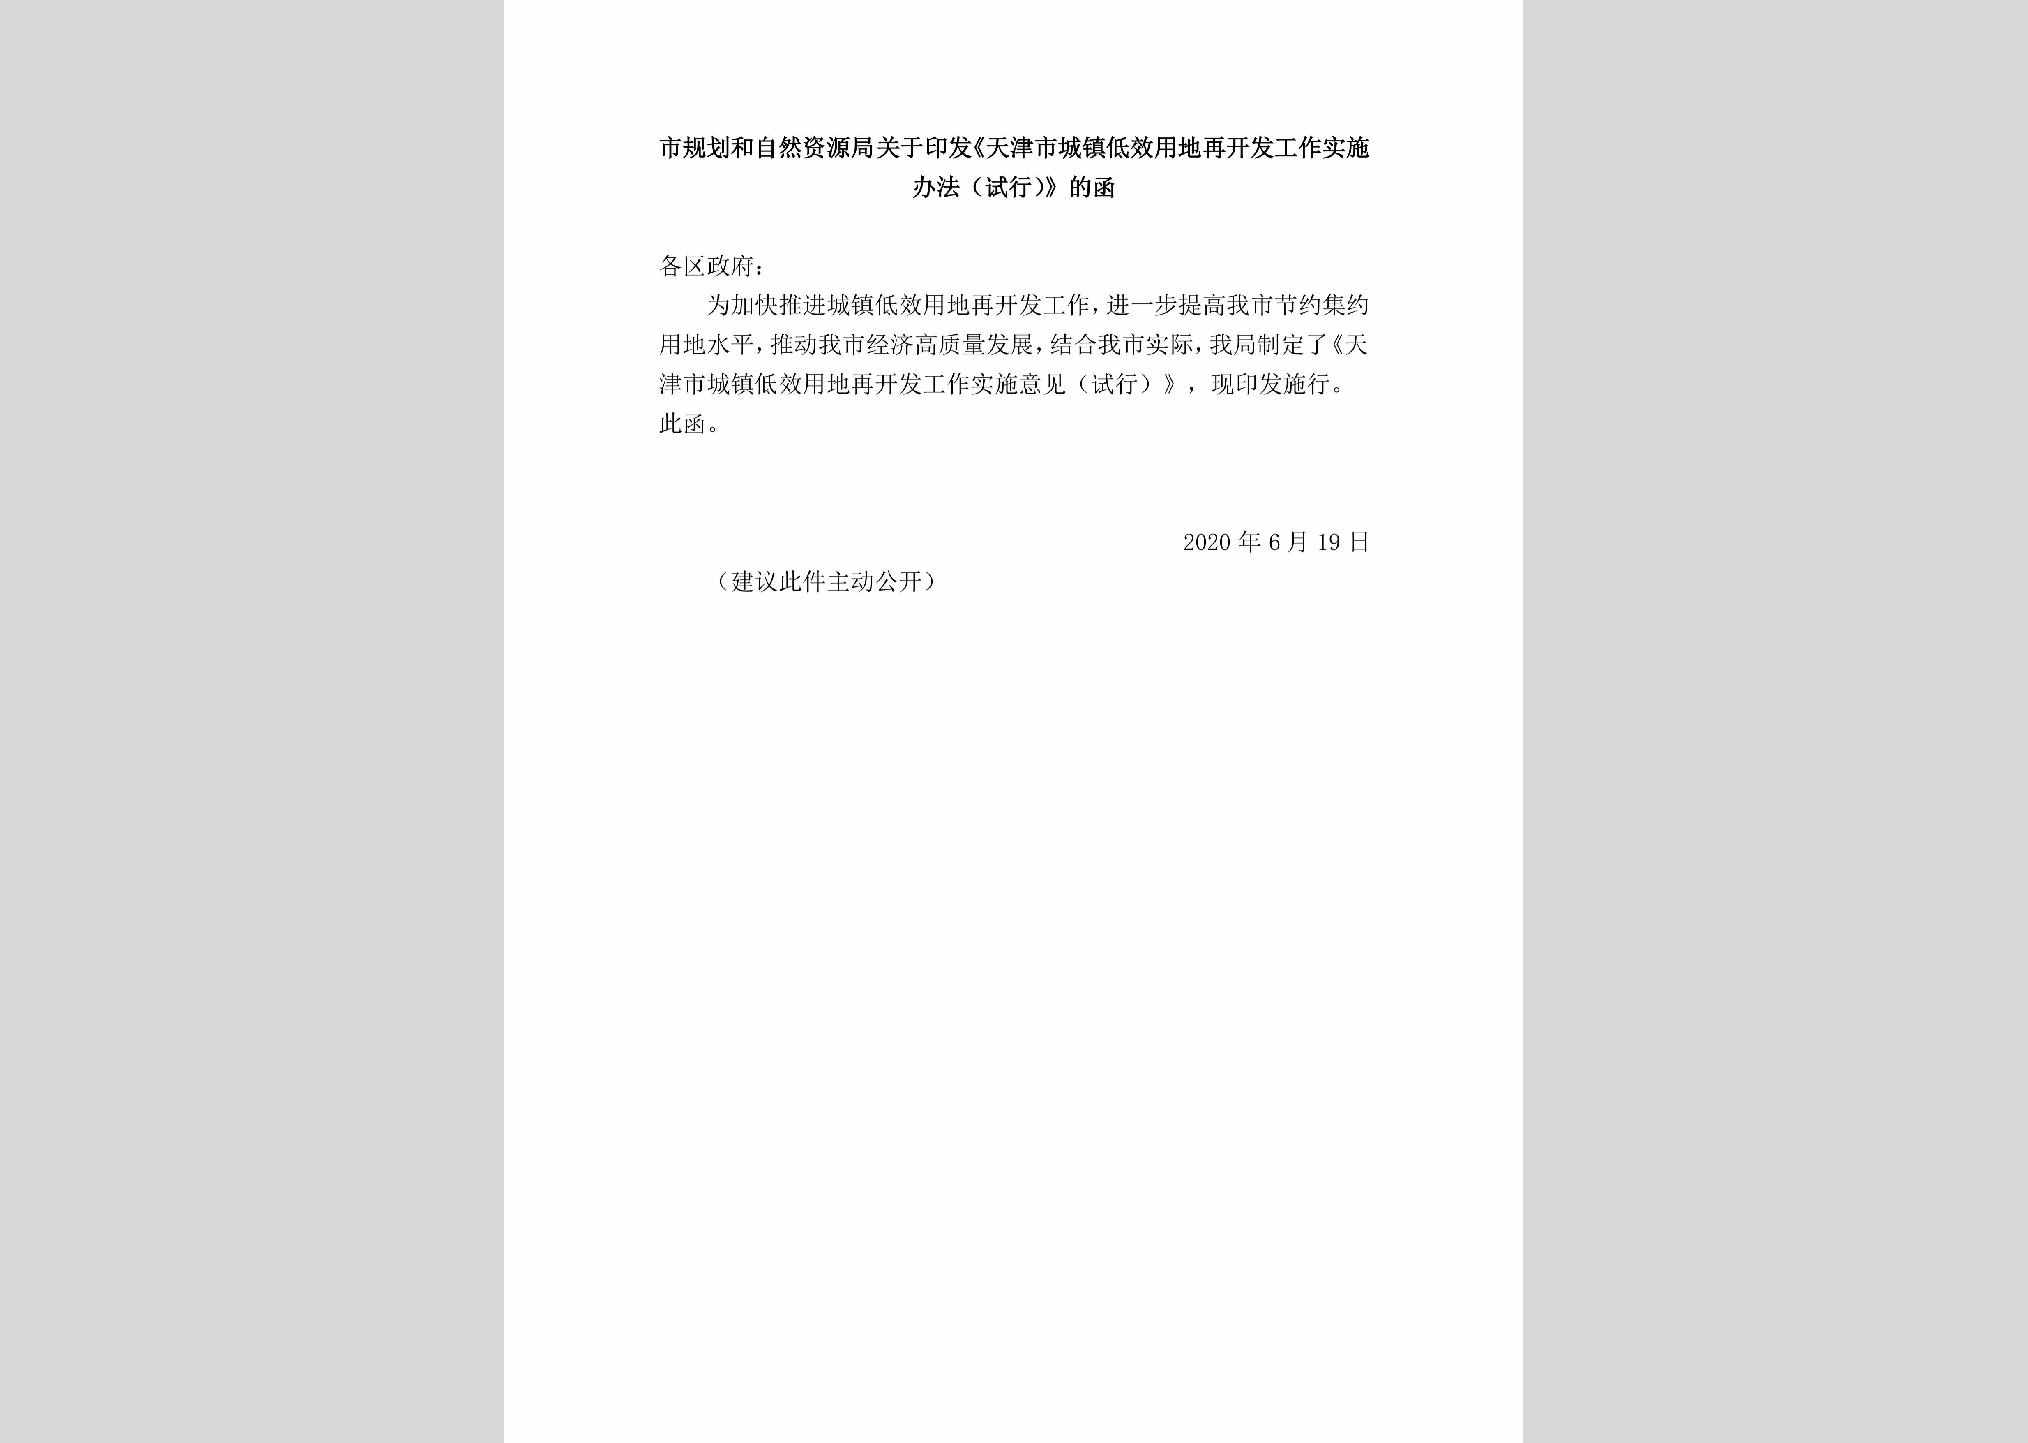 TJSCZDXY：市规划和自然资源局关于印发《天津市城镇低效用地再开发工作实施办法（试行）》的函